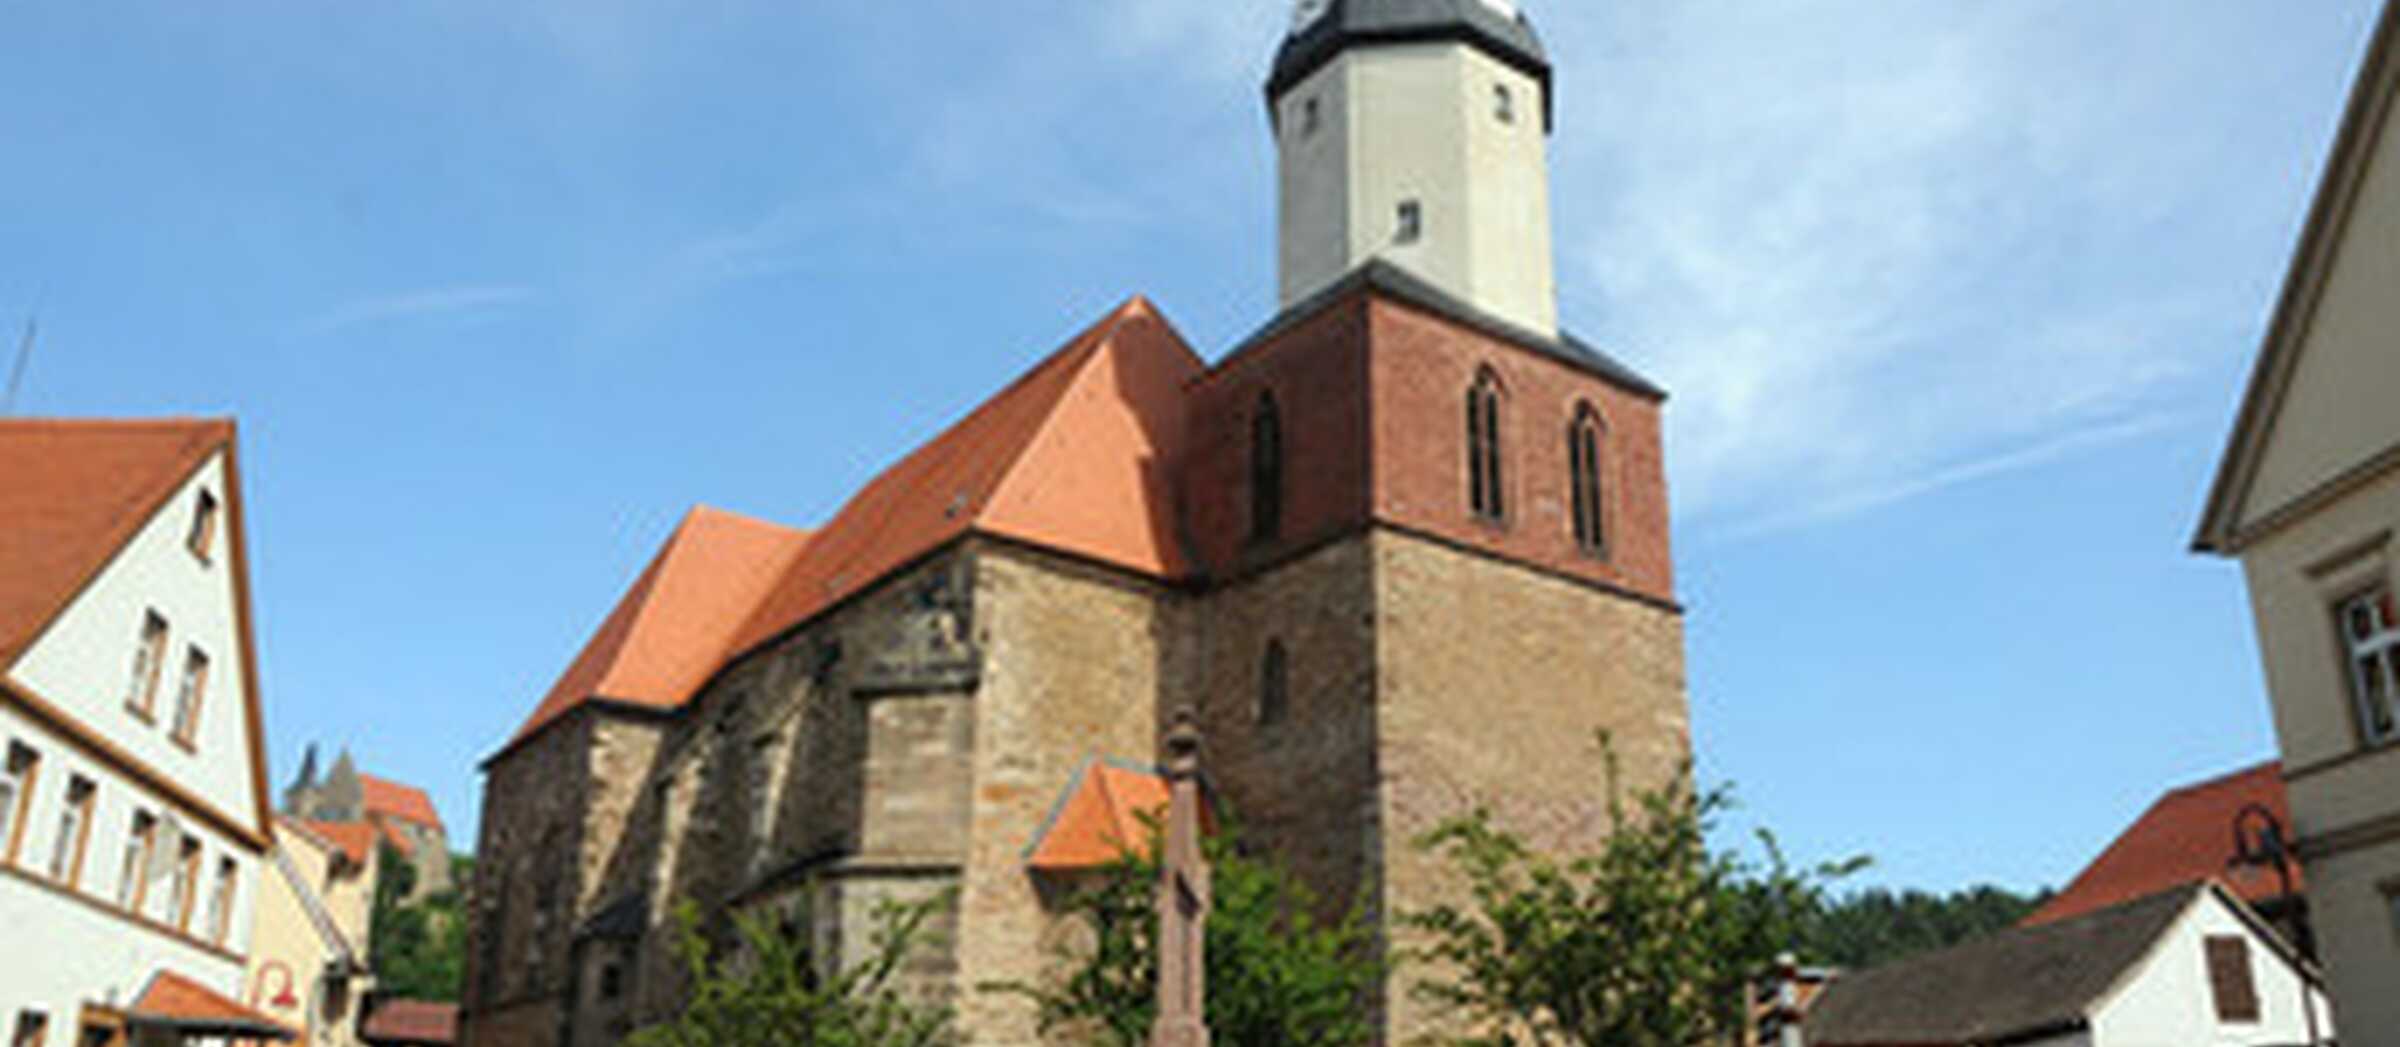 Kirche St. Georg